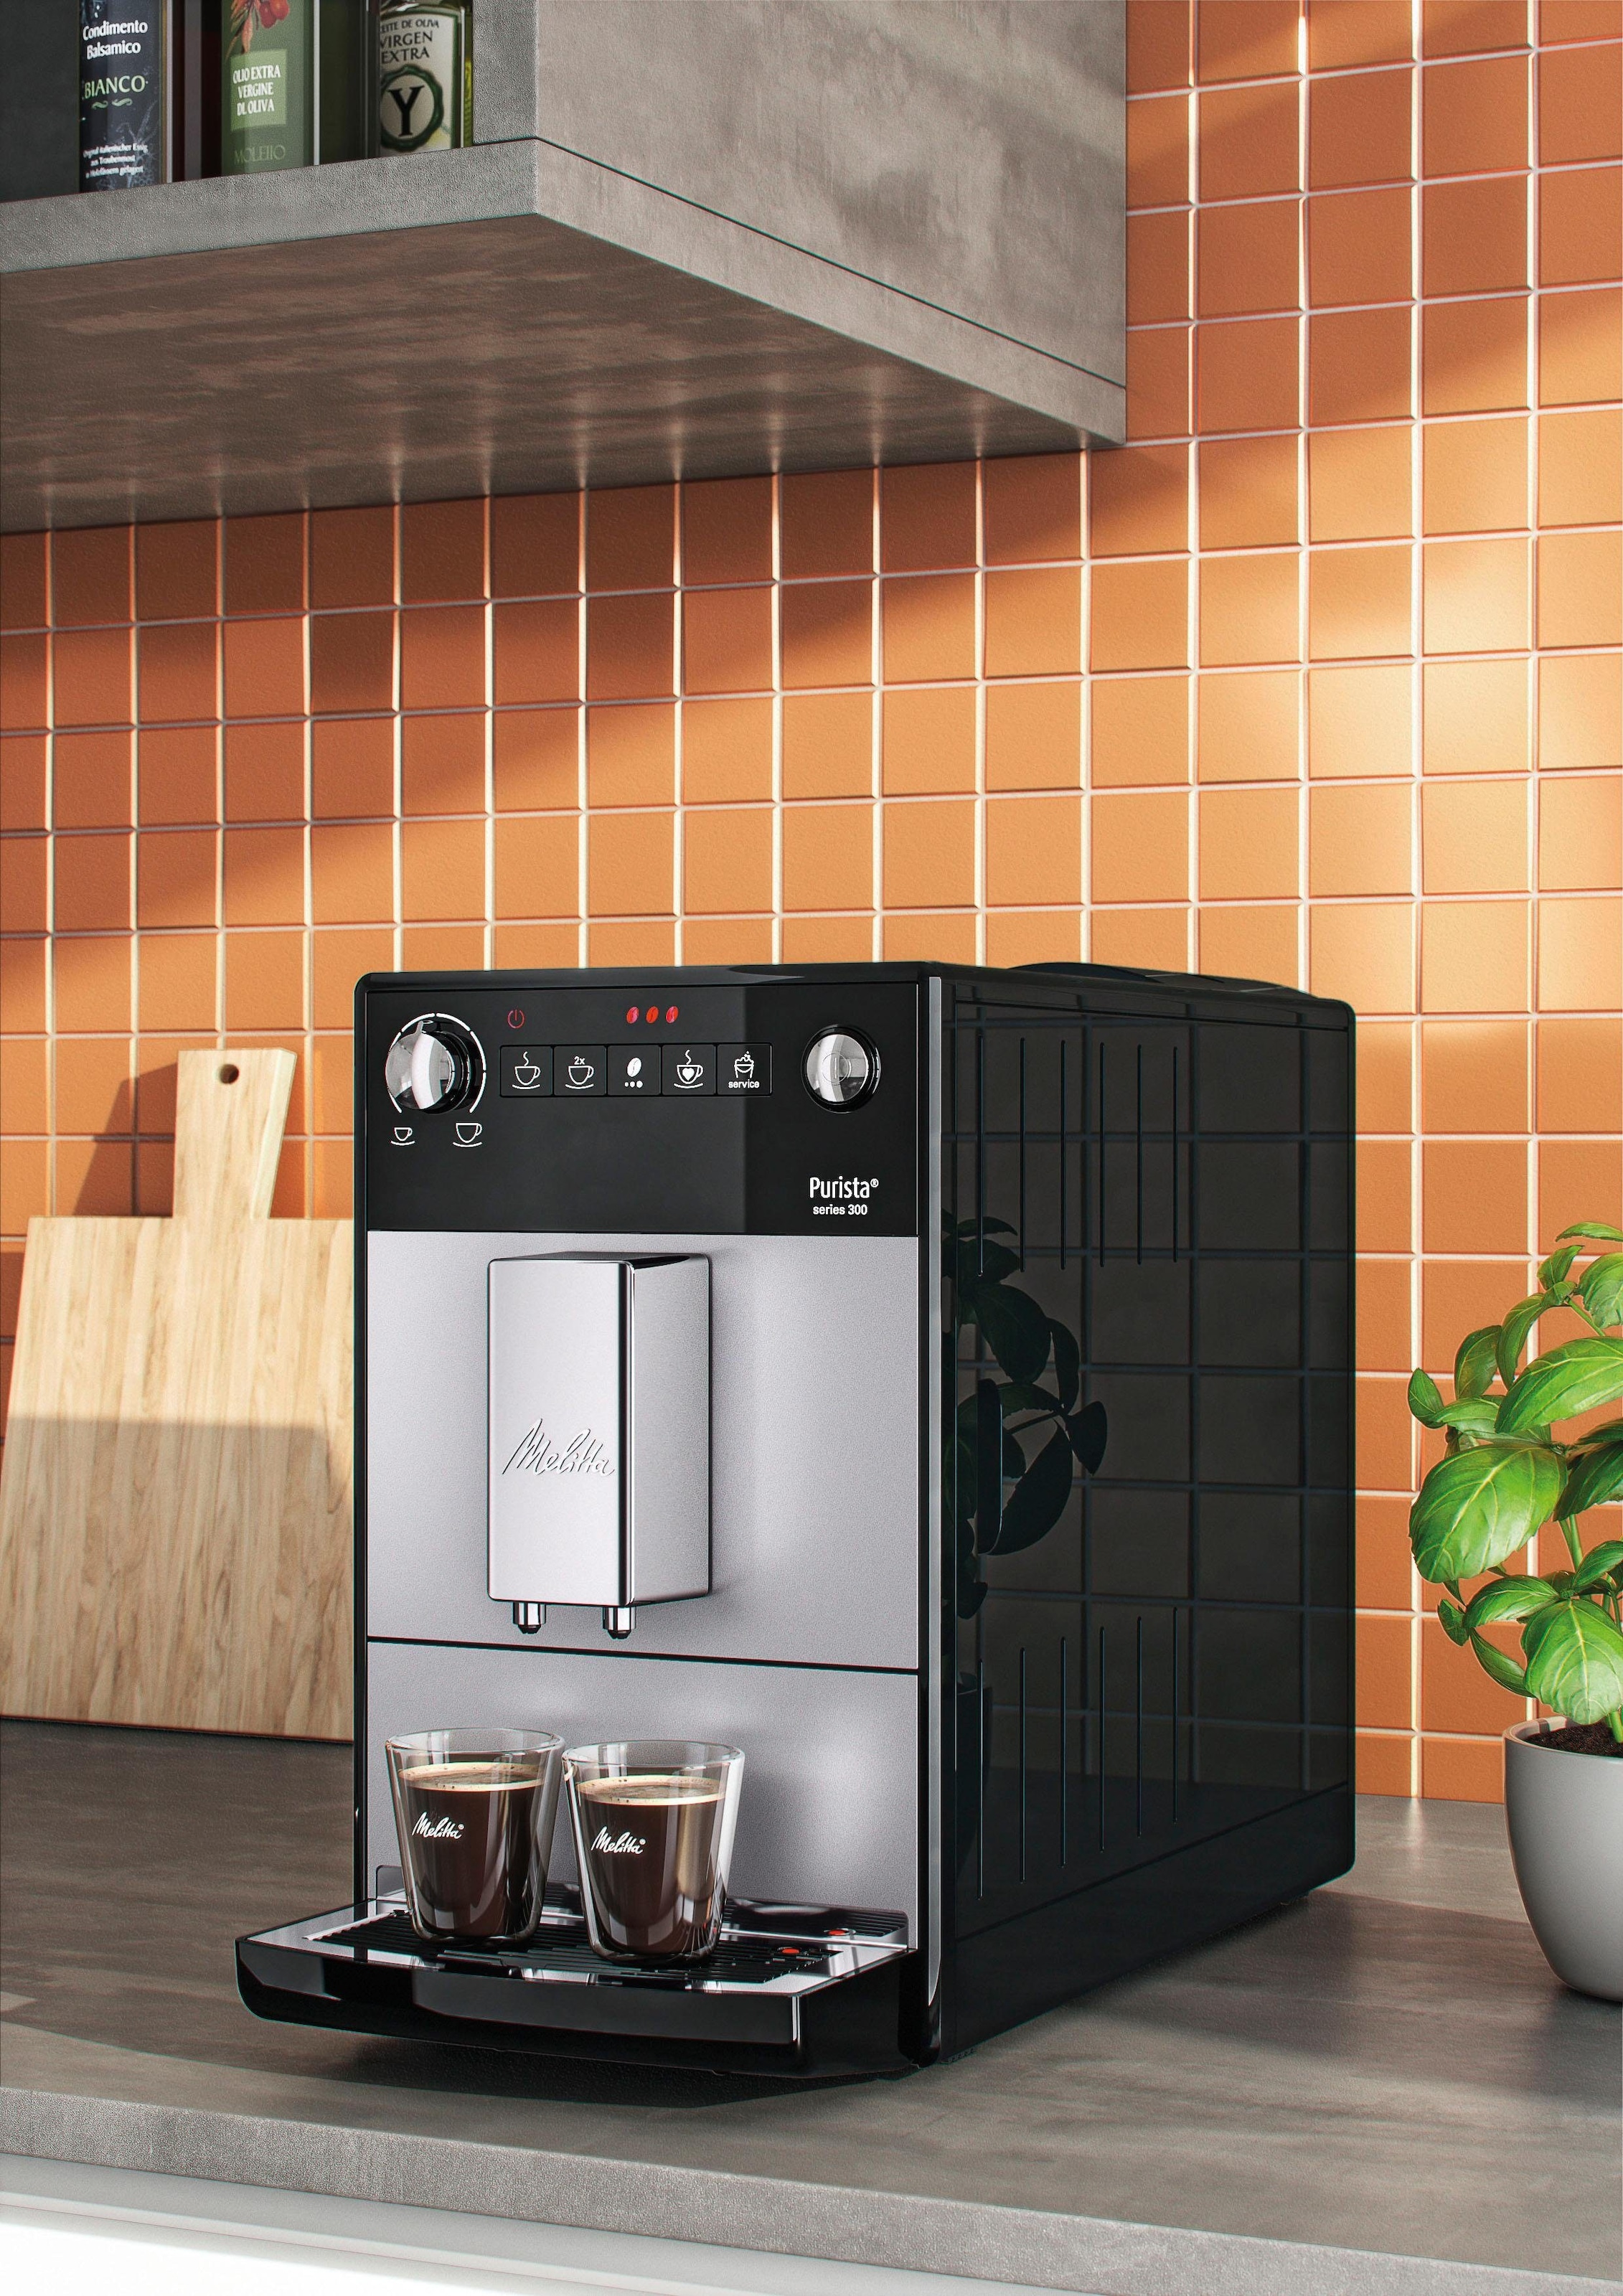 Melitta Kaffeevollautomat »Purista® F230-101, silber/schwarz«,  Lieblingskaffee-Funktion, kompakt & extra leise bestellen | BAUR